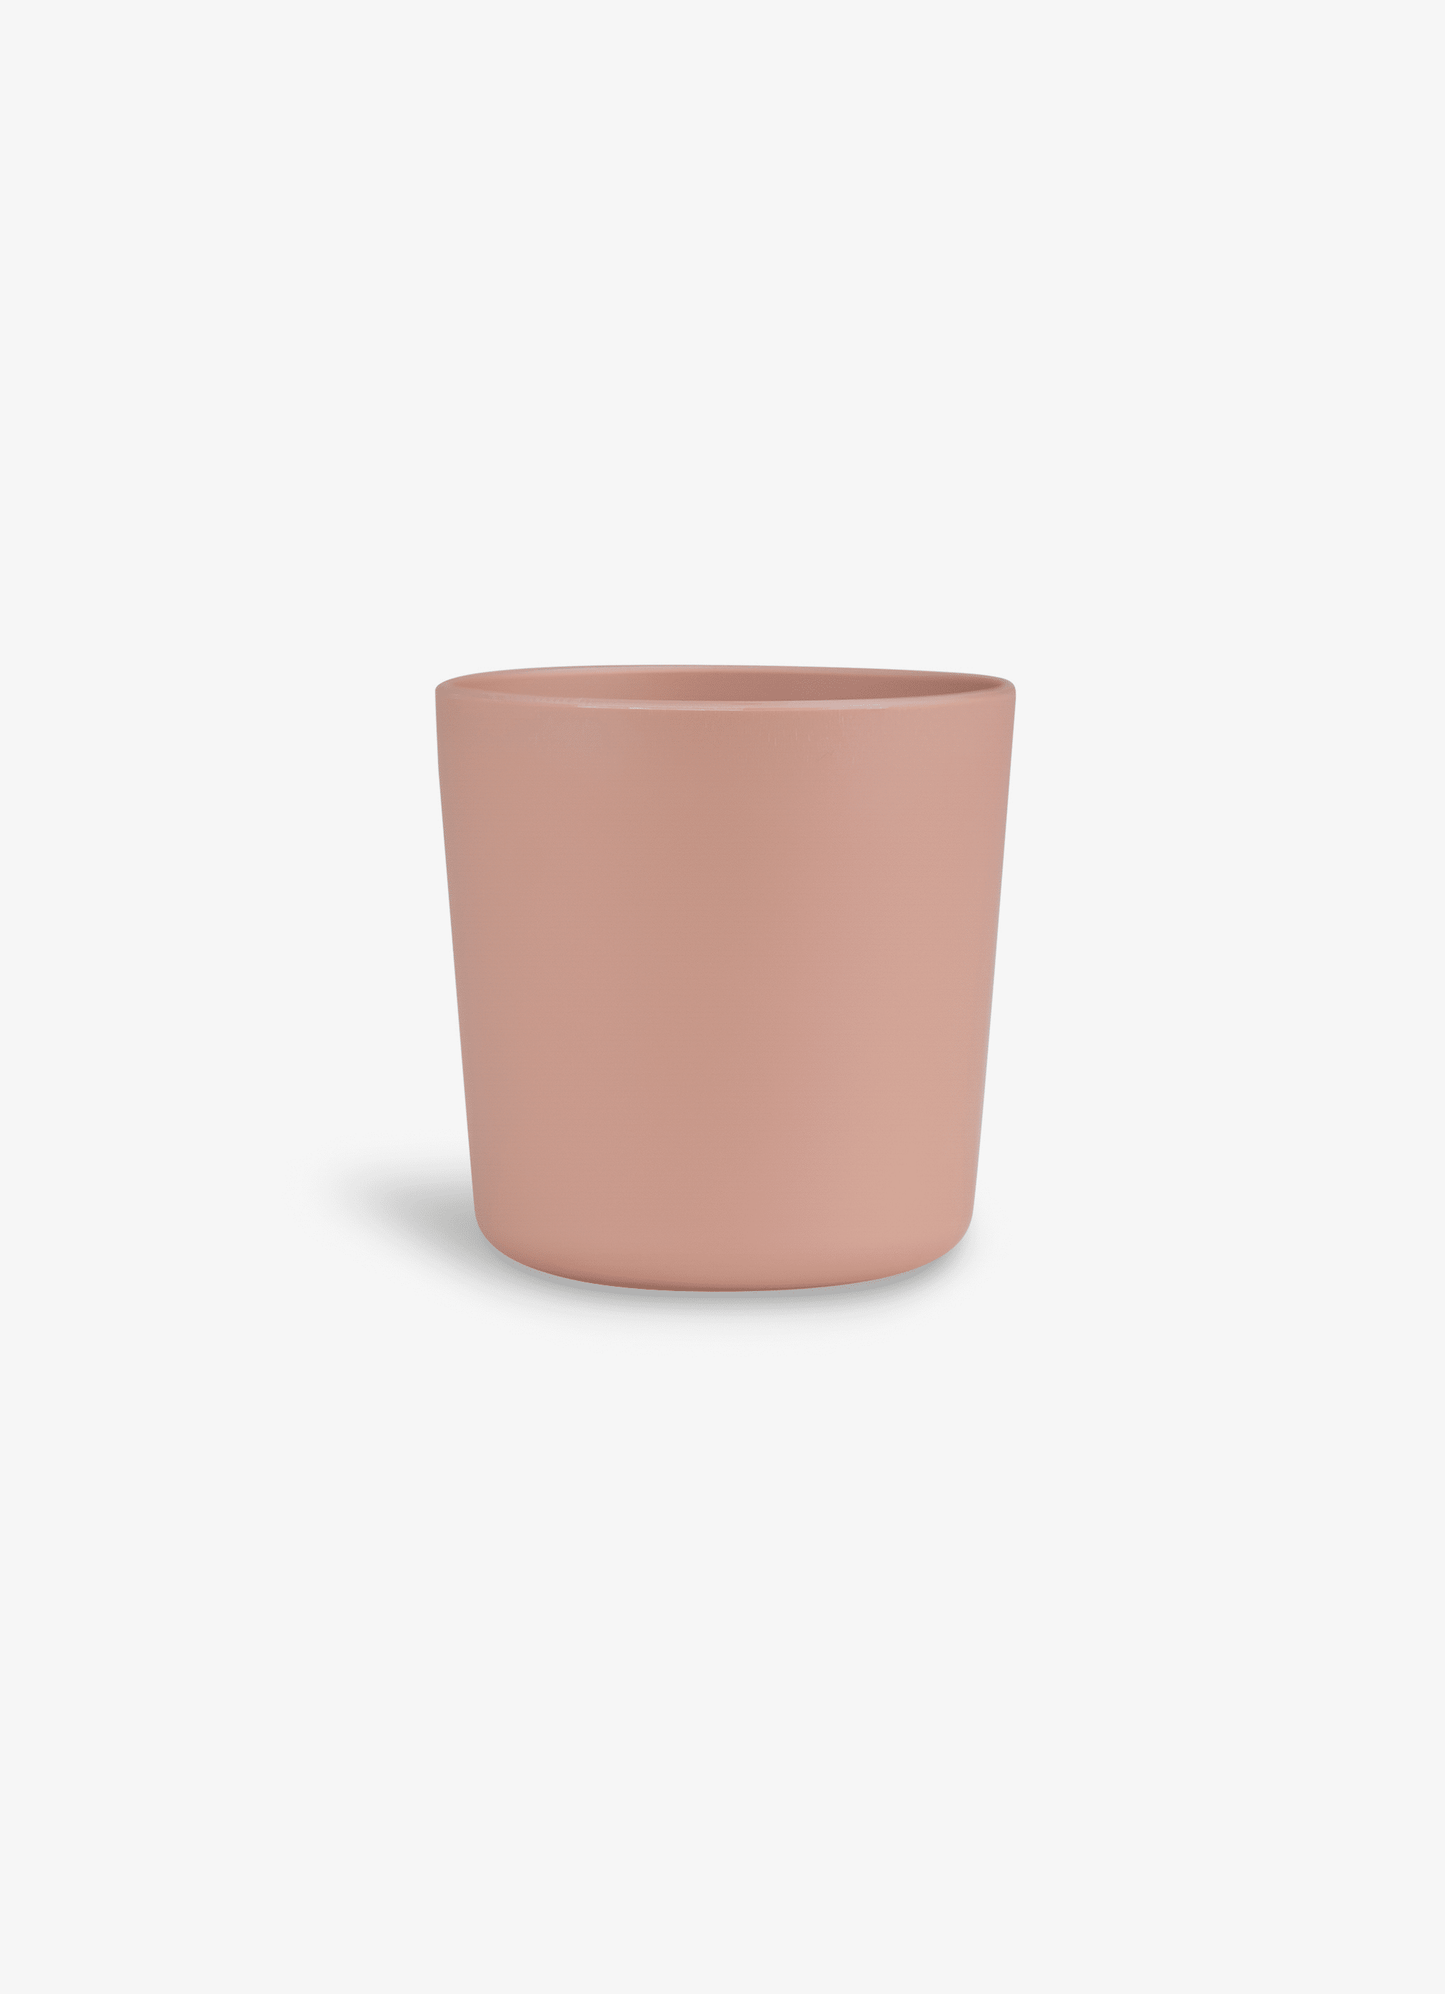 Bio-Based Cups - Set of 4 - Pink/ Cream